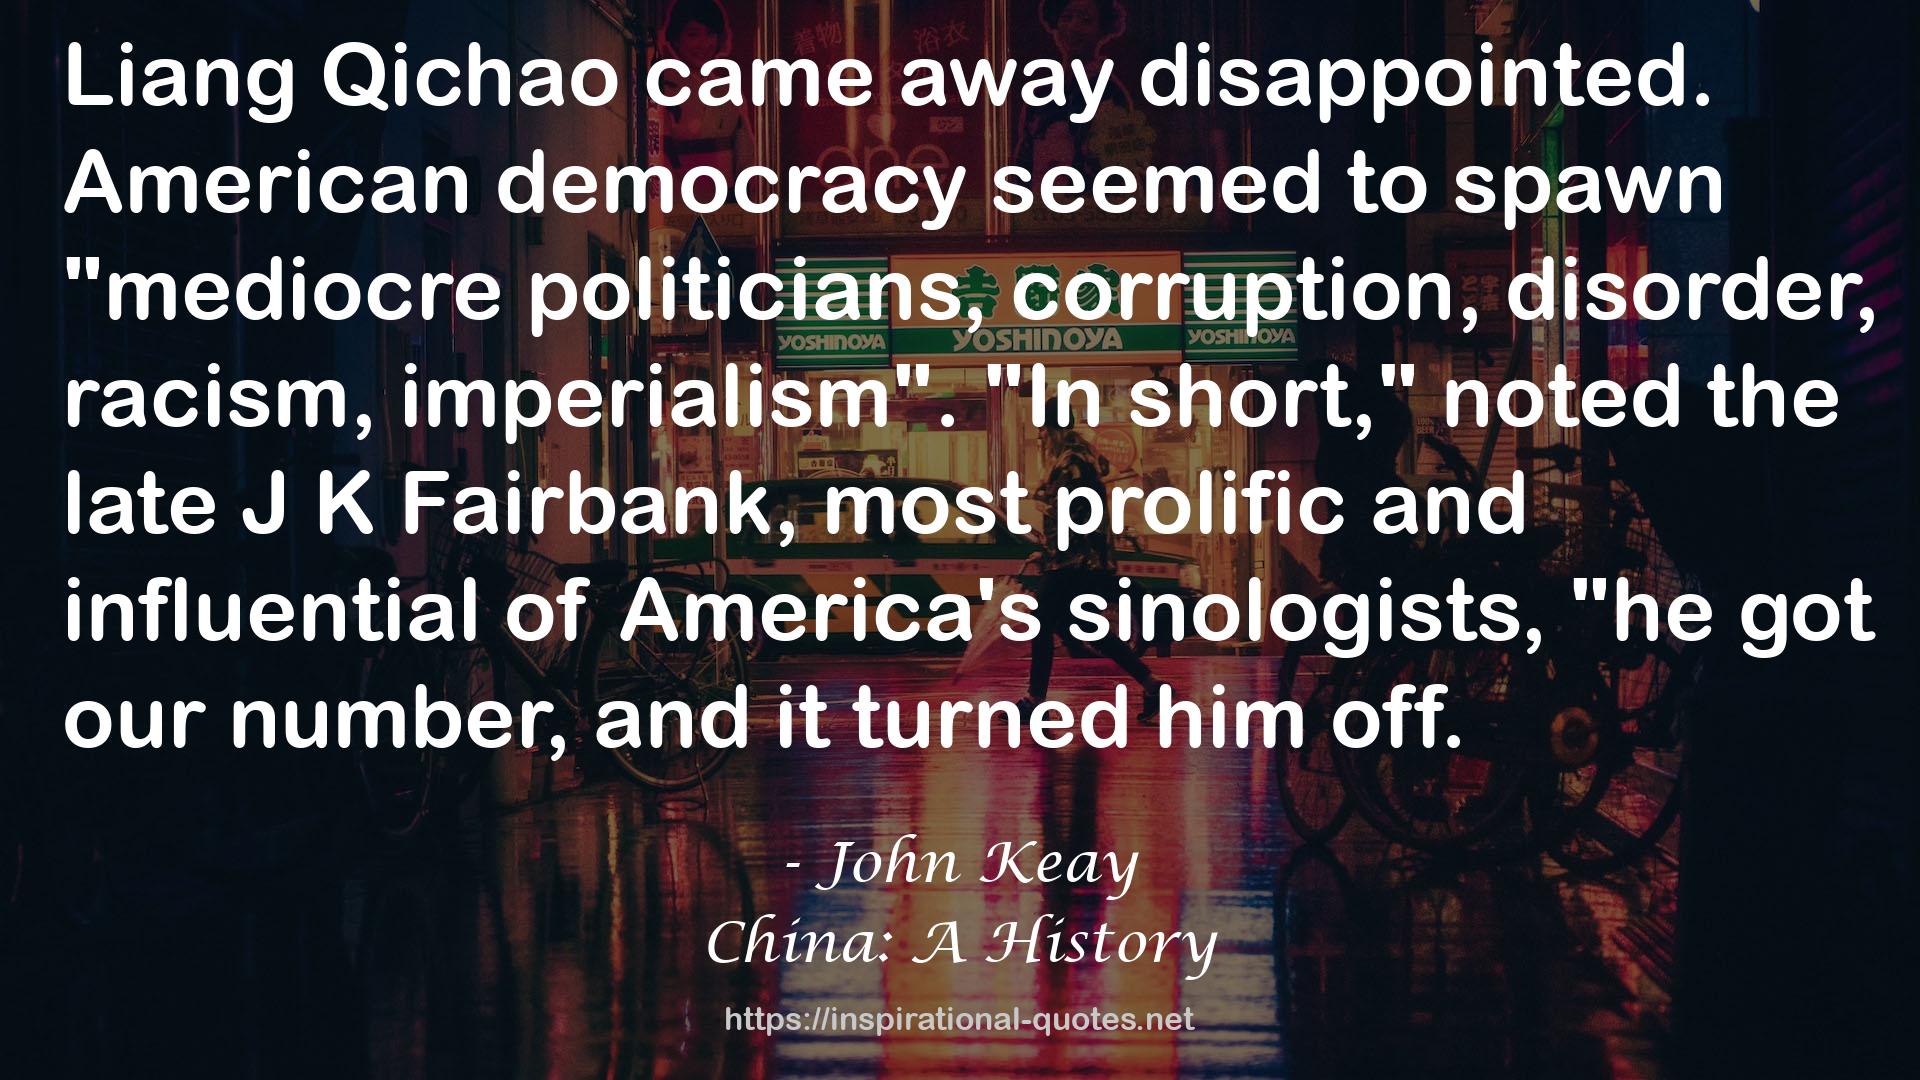 China: A History QUOTES